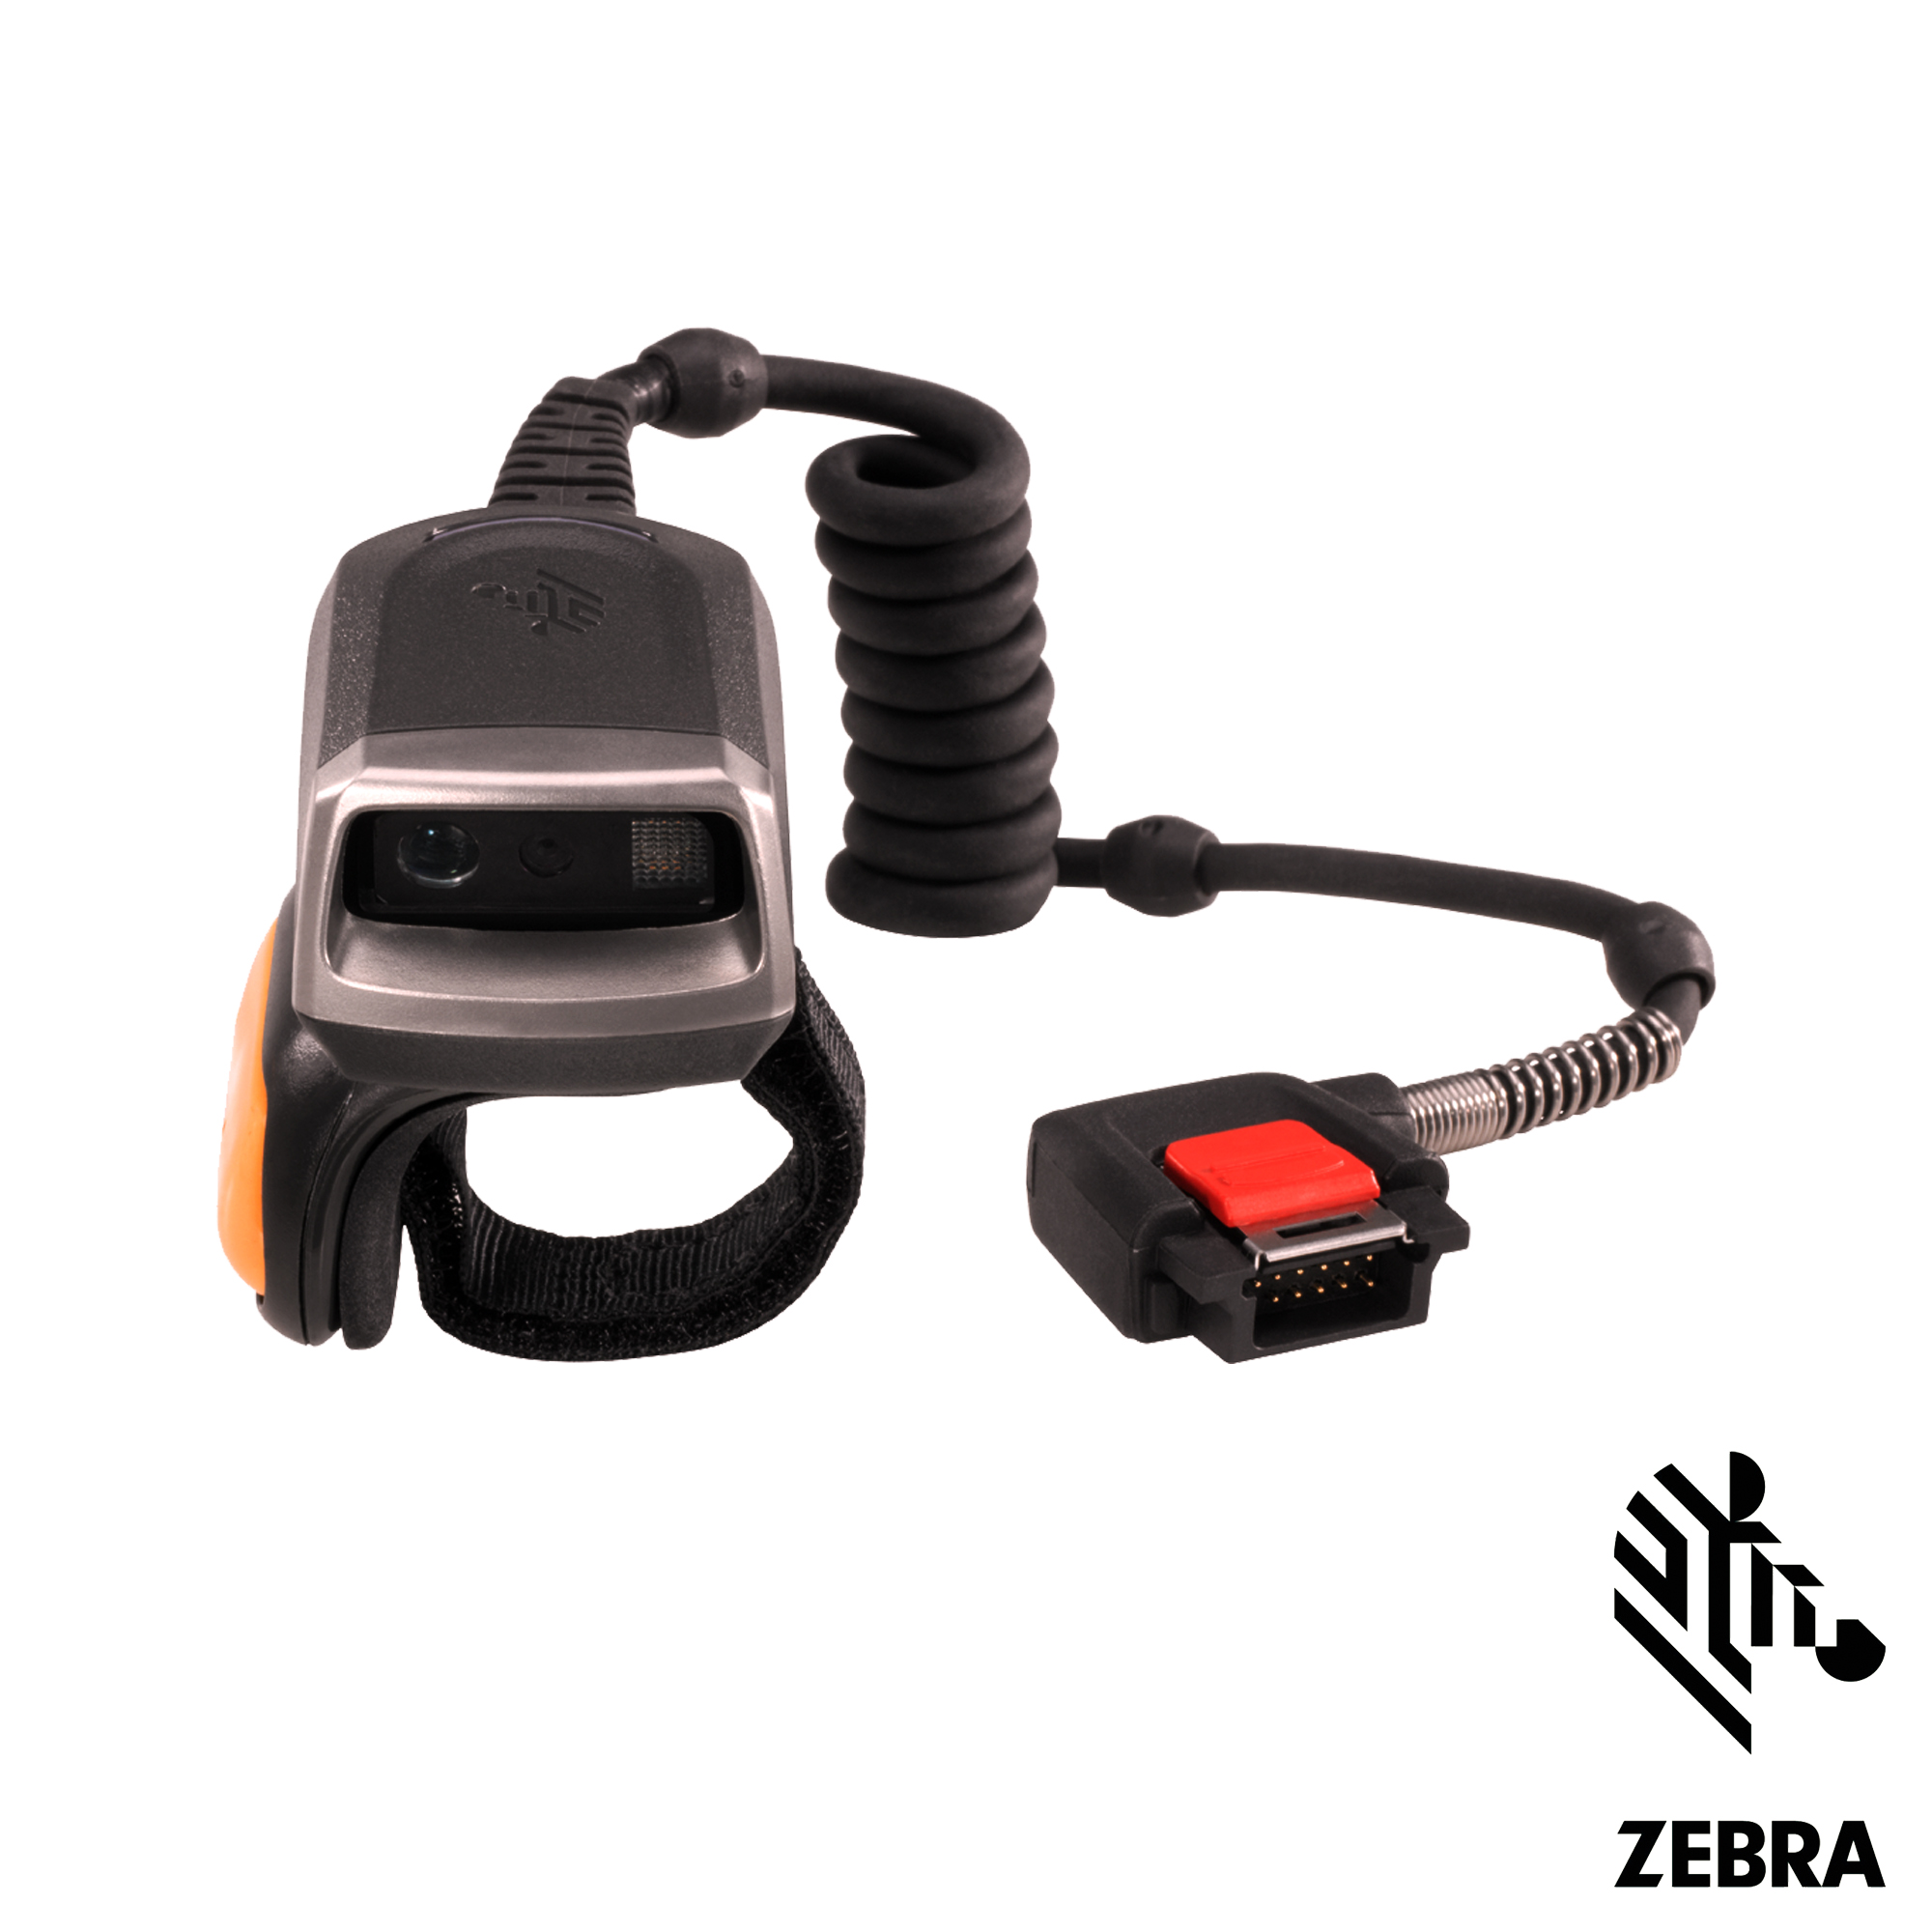 Зебра сканер коды. Сканер-кольцо Zebra rs4000. Сканер Zebra RS 5600. ТСД сканер Zebra. Сканер Zebra mx101-sr7000ww.